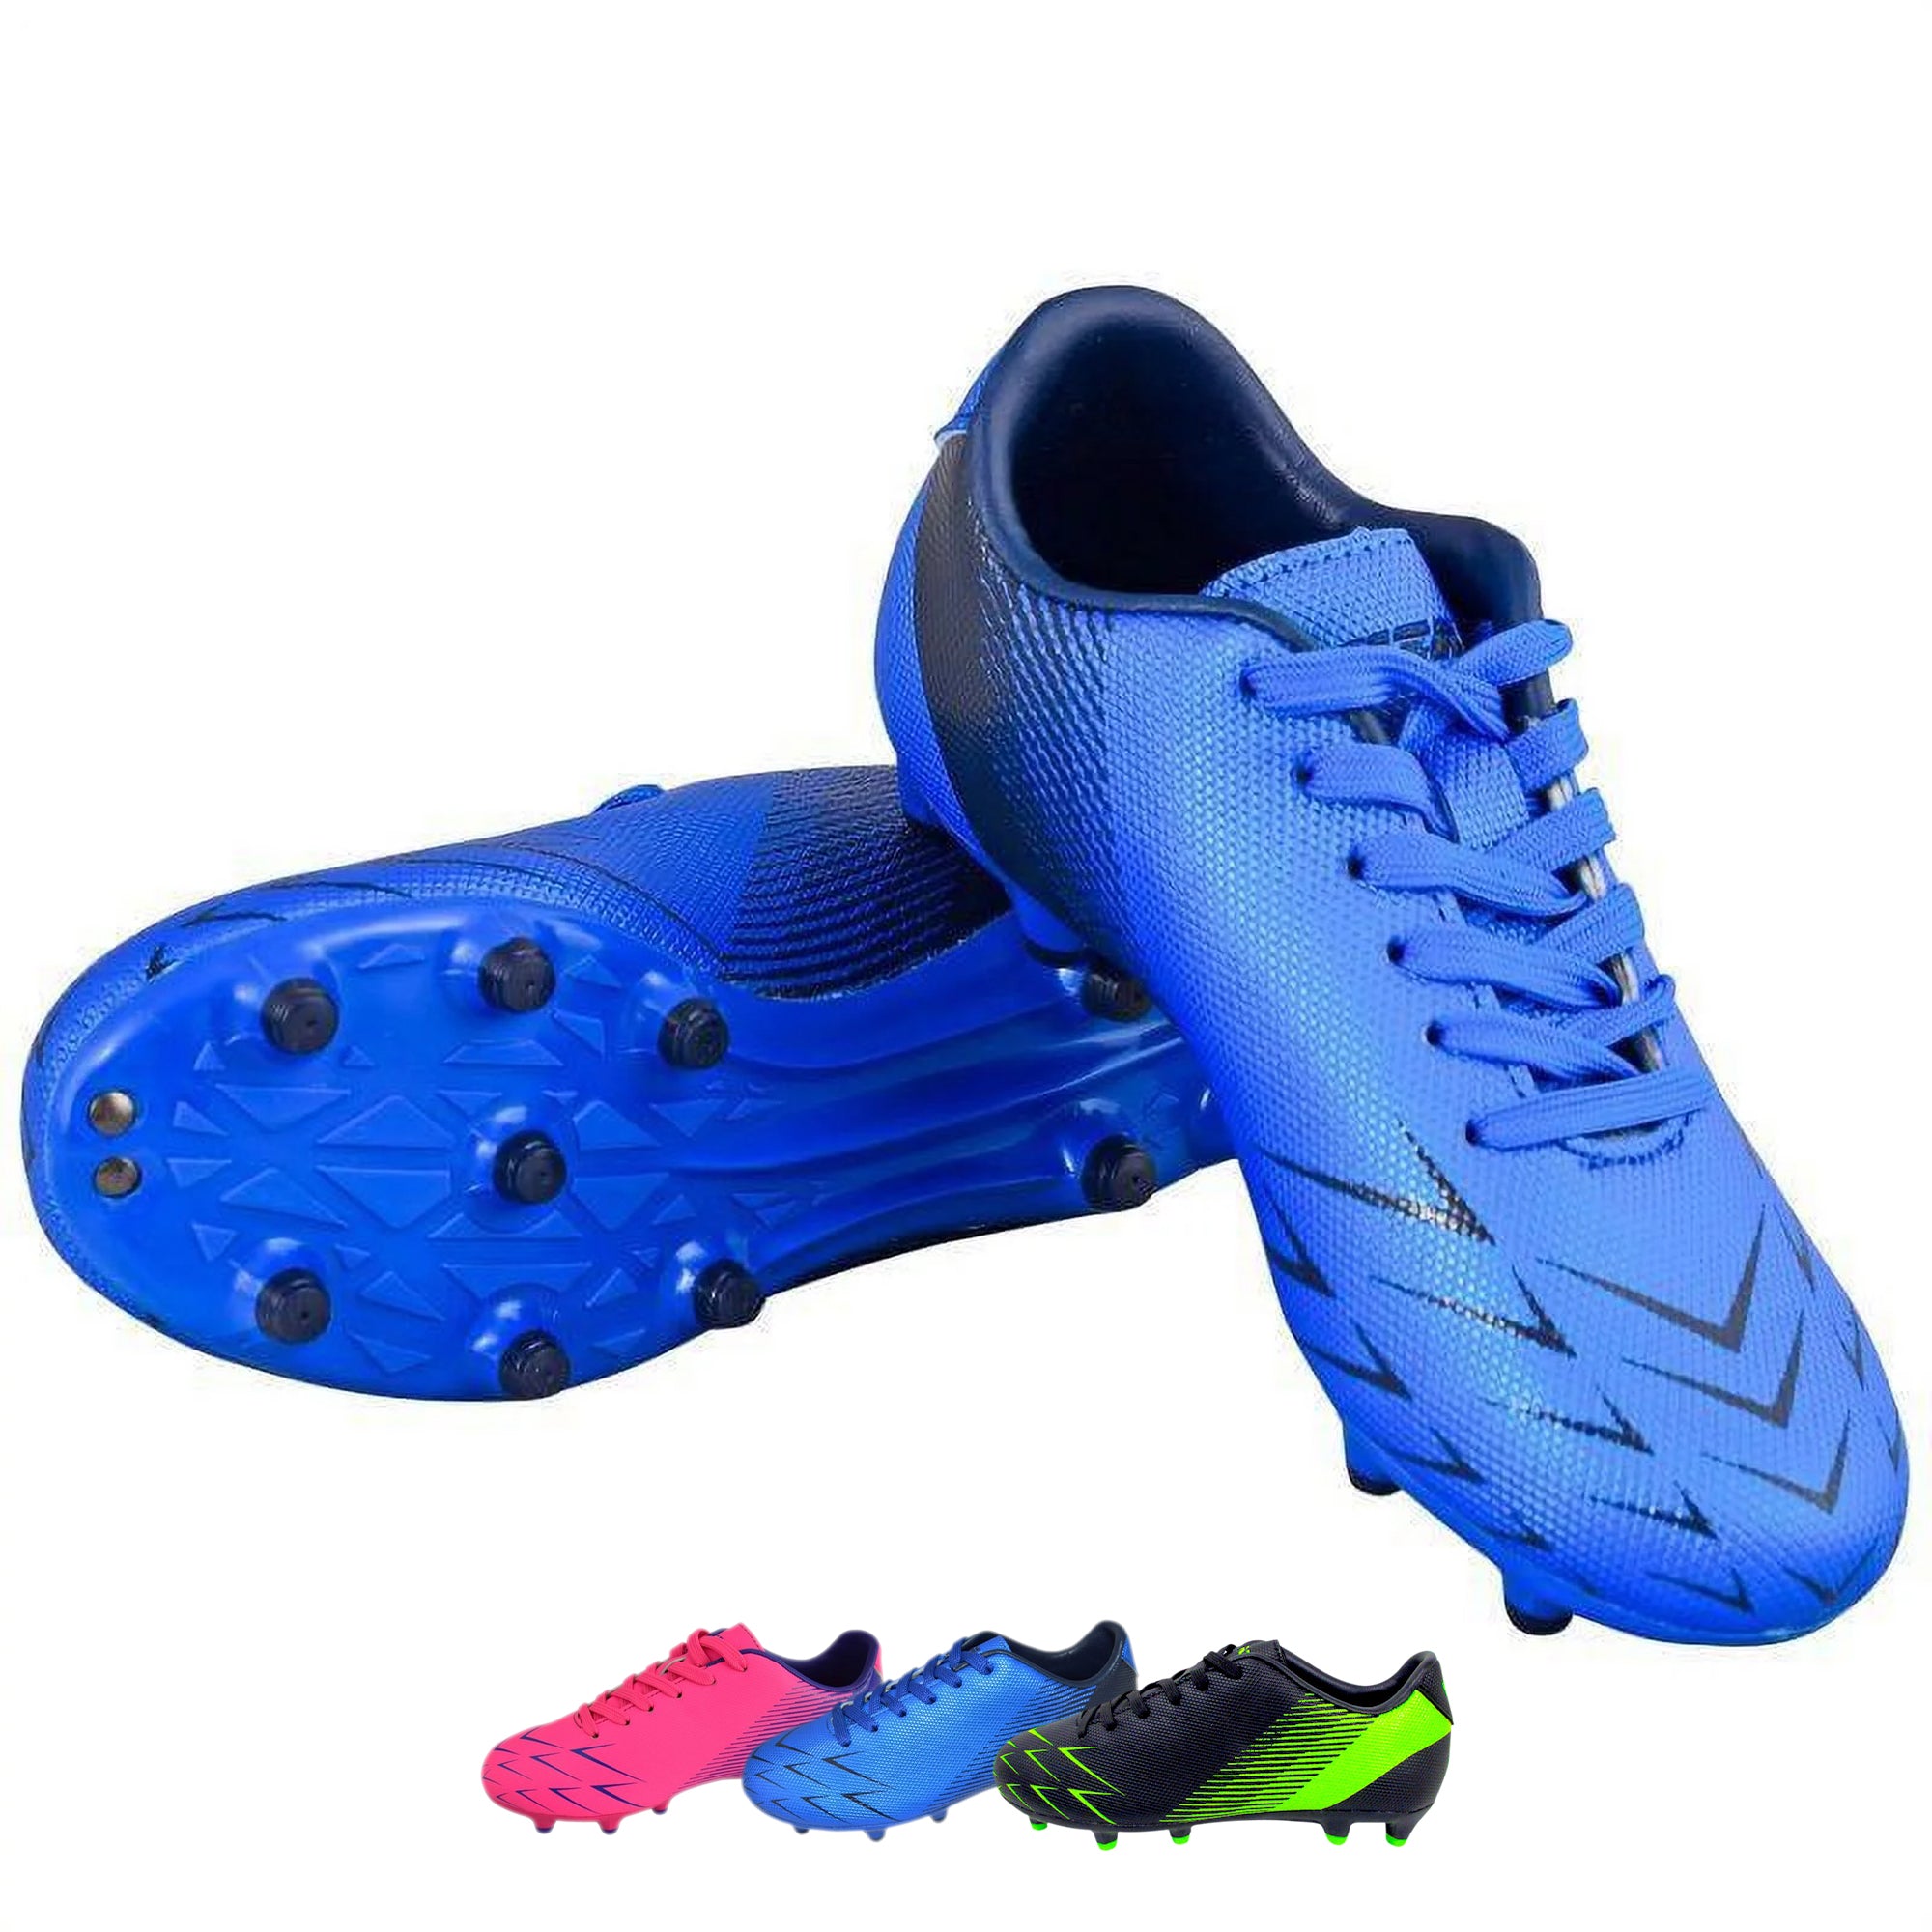 Ranger Firm Ground Soccer Shoes - Blue/Black